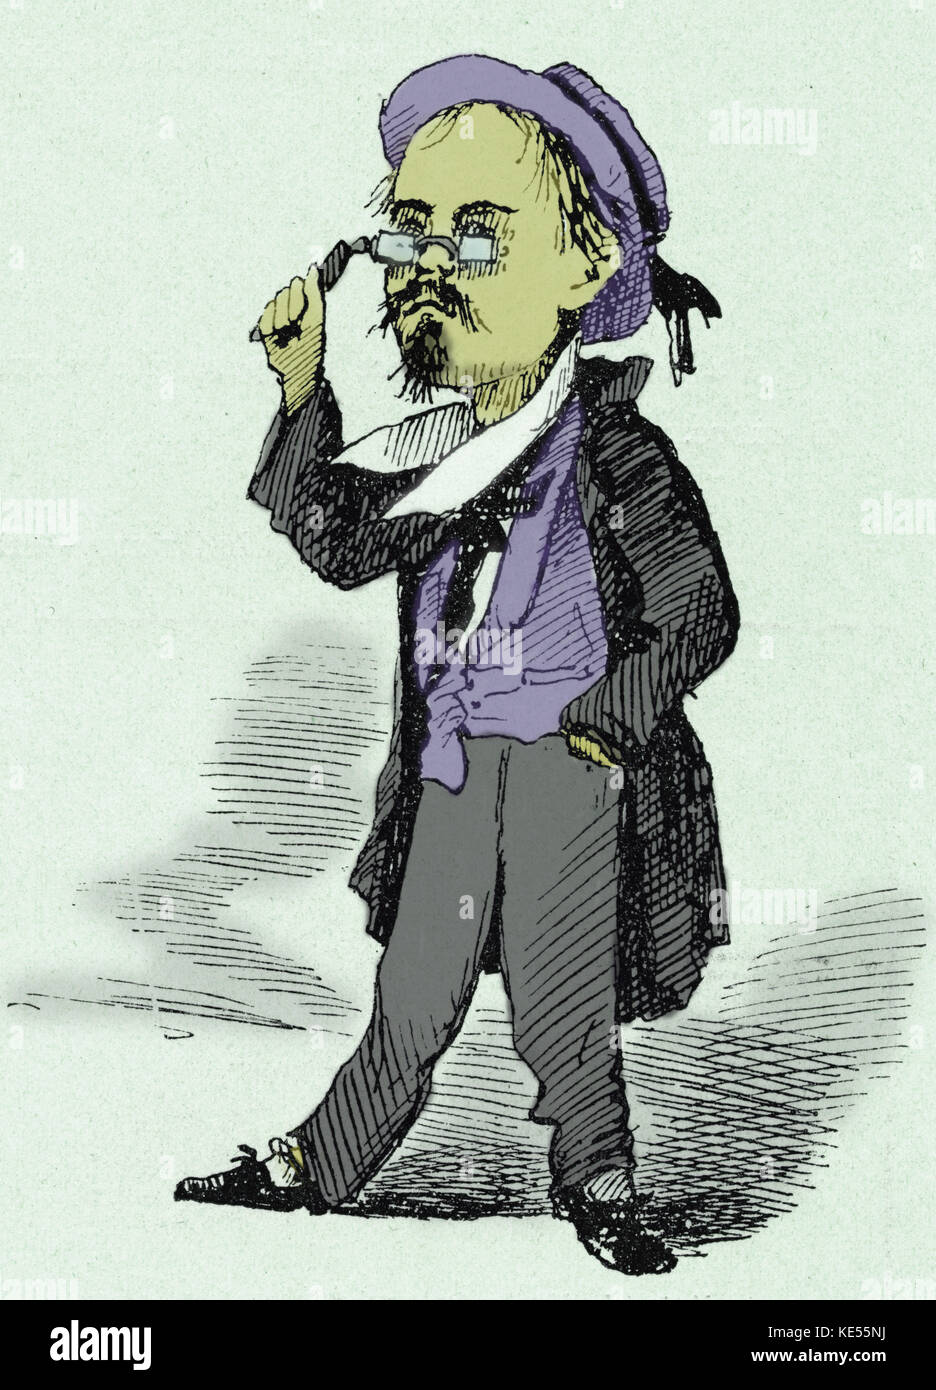 GHISLANZONI, Antonio - Italienische Bariton (1824-1893). Karikatur von 1856 in'Uomo Di Pietra". Eingefärbte Version. Stockfoto